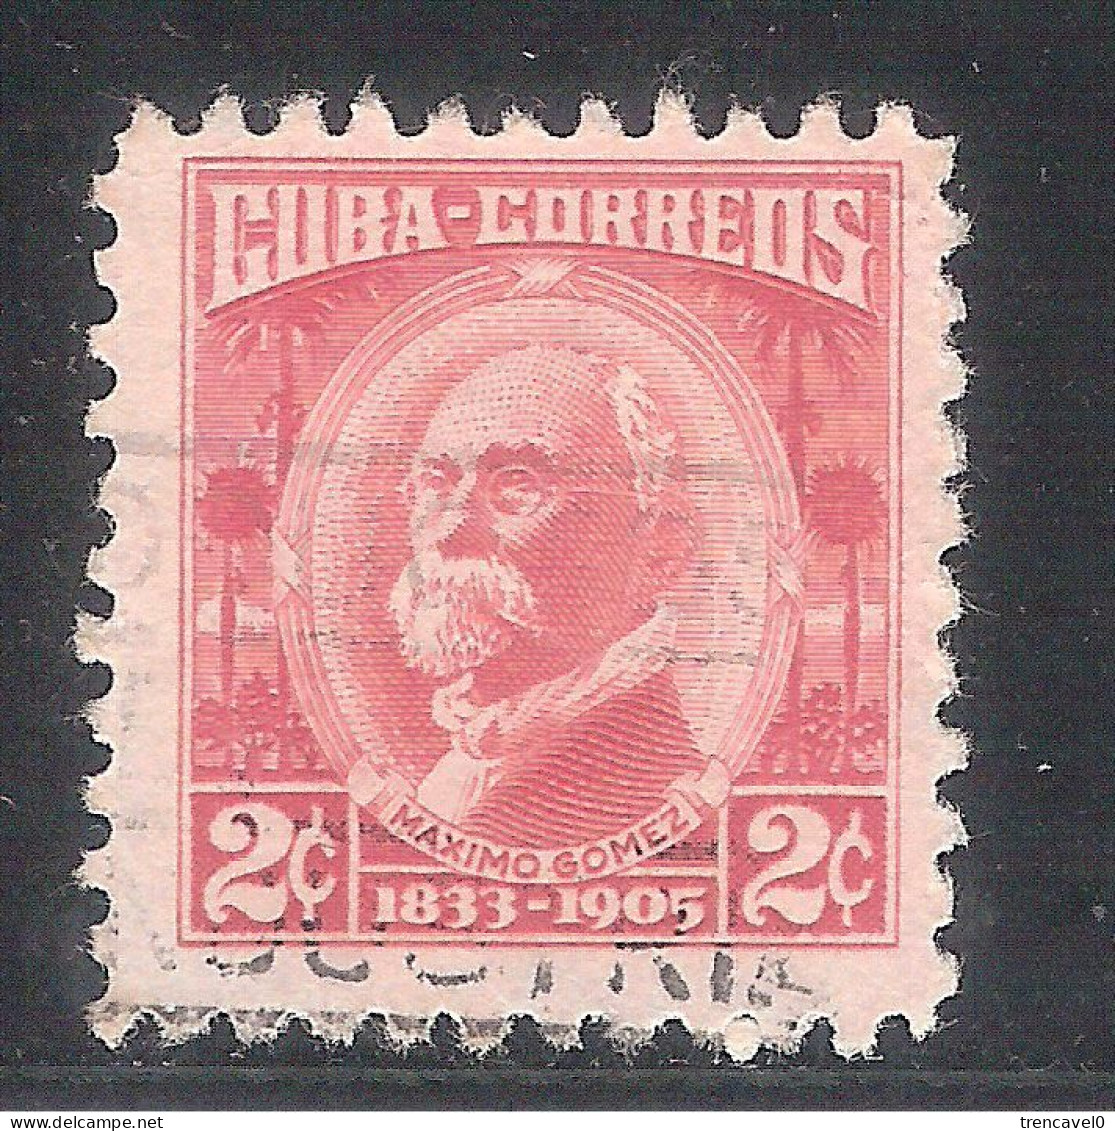 Cuba 1954- 1 Sello Usado Y Circulado - Máximo Gómez - Usati